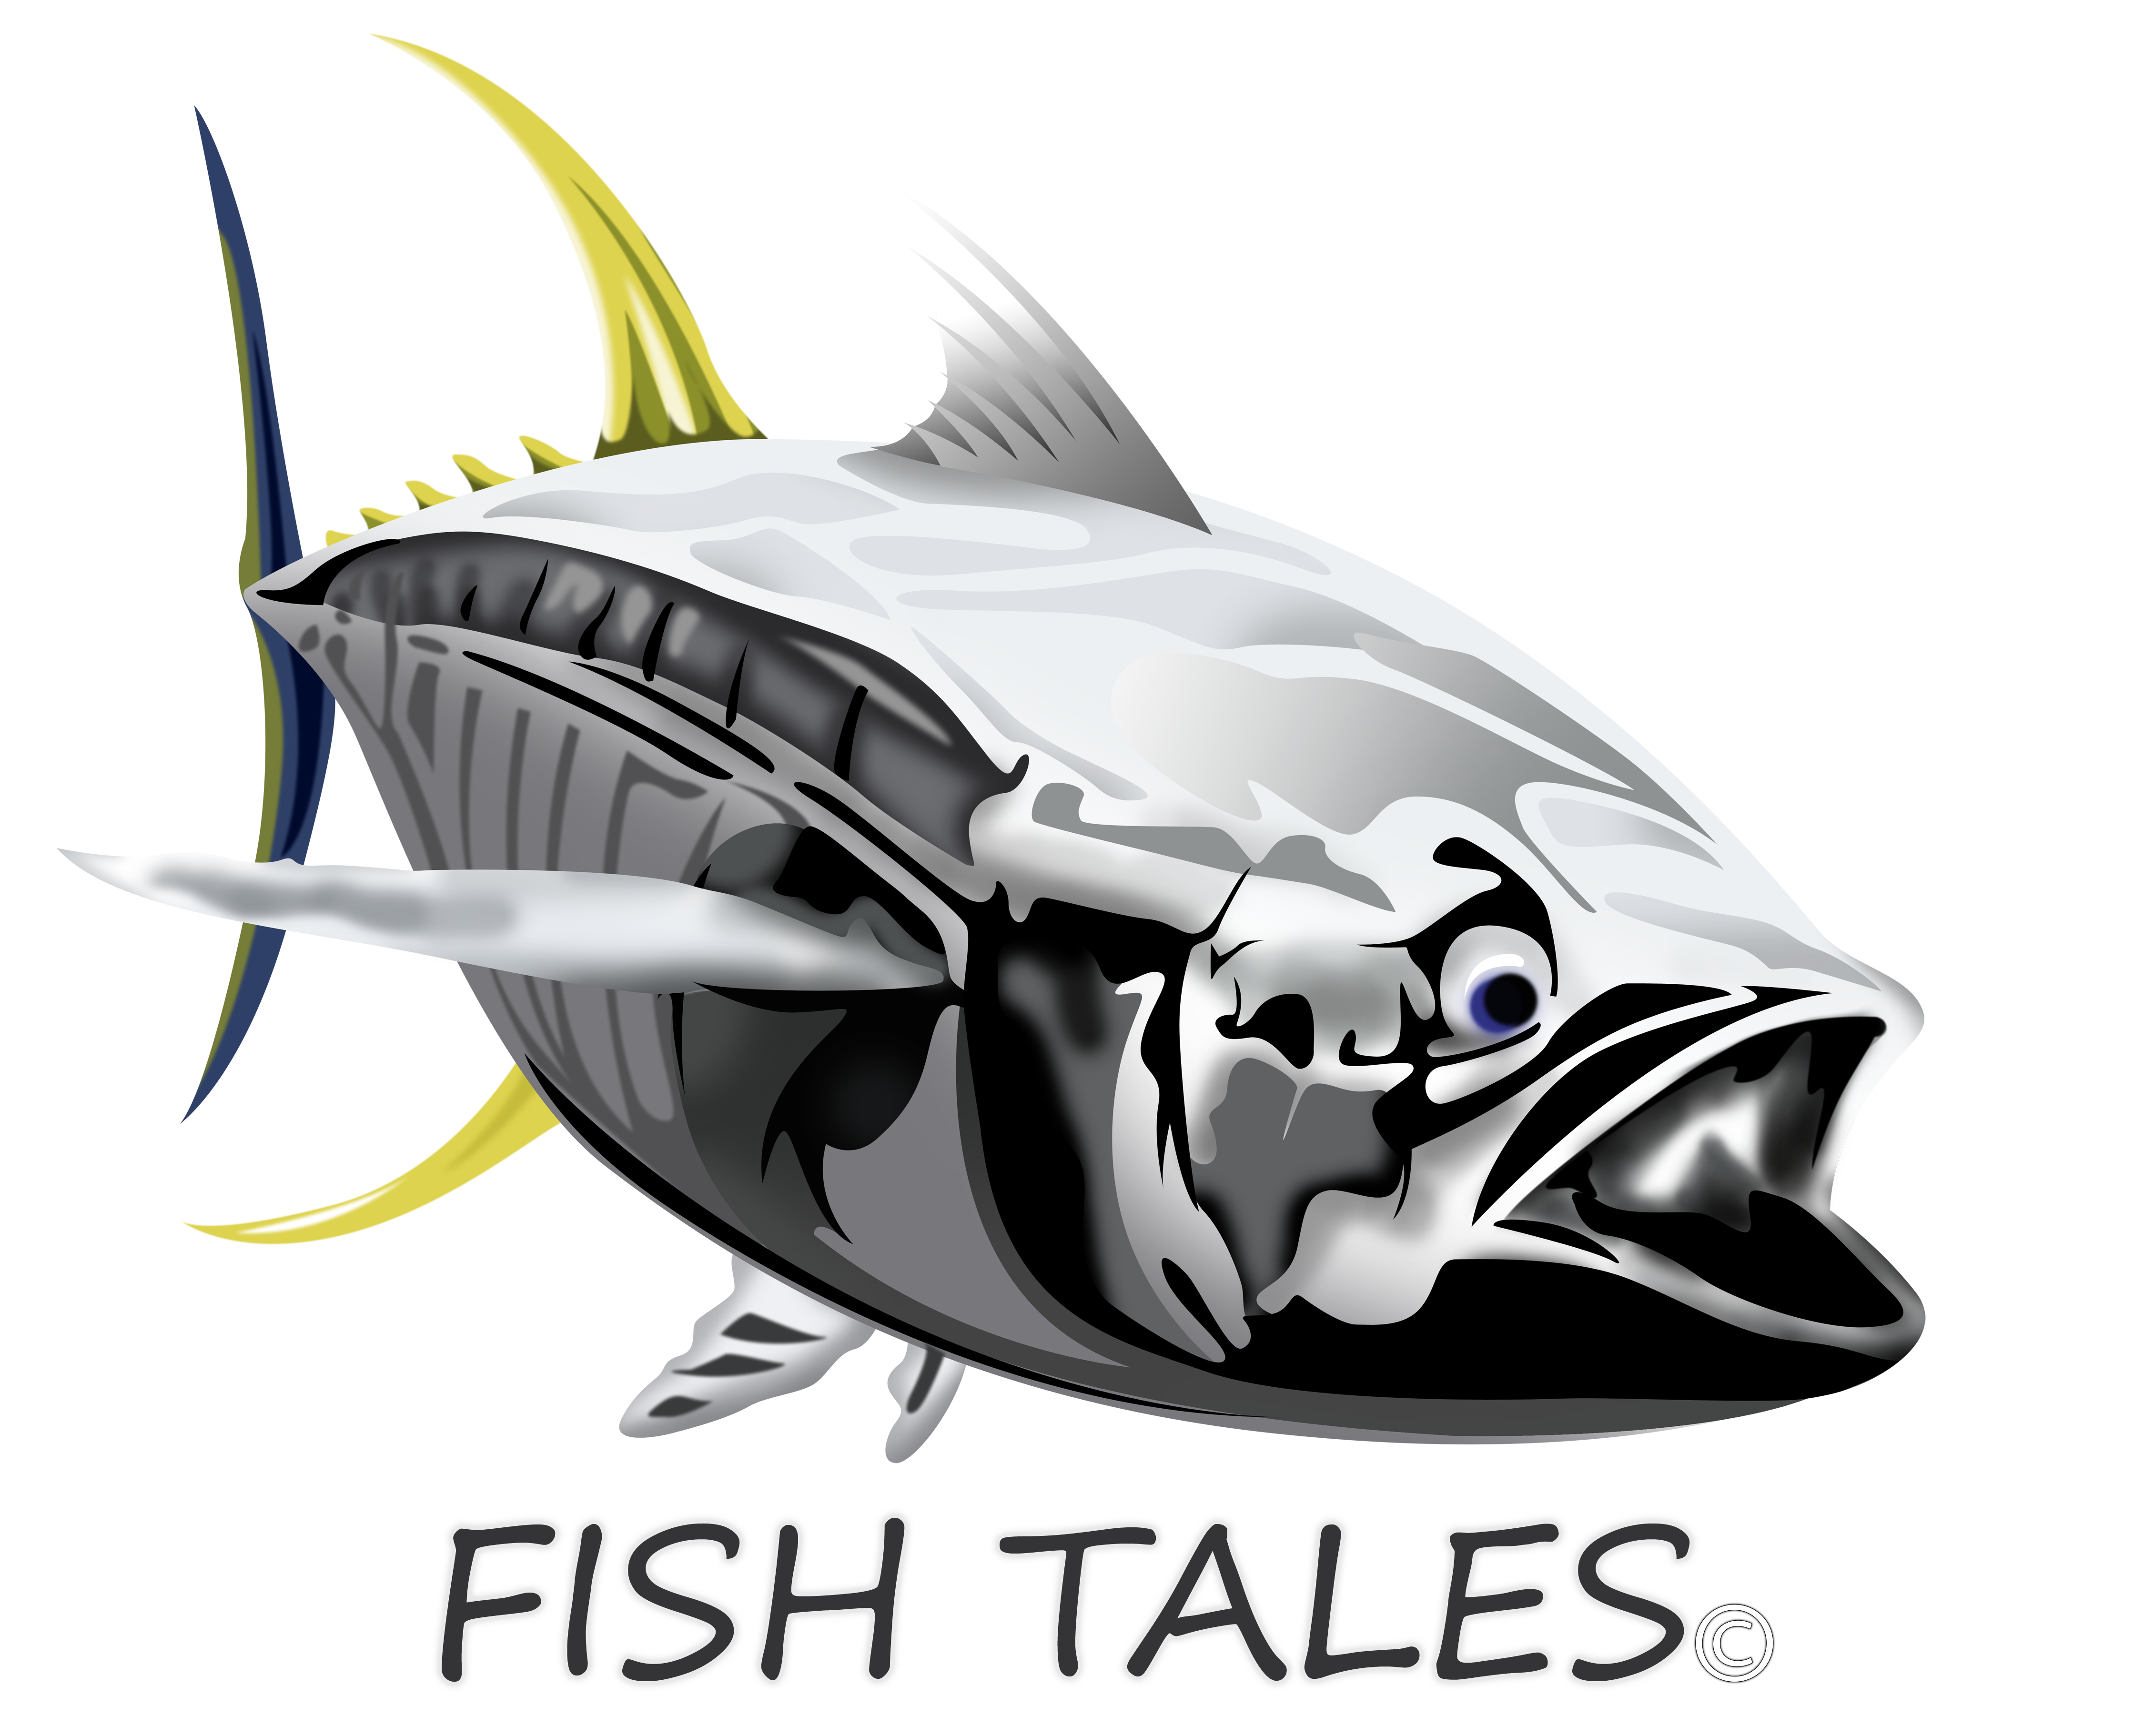 Fish Tales Charters